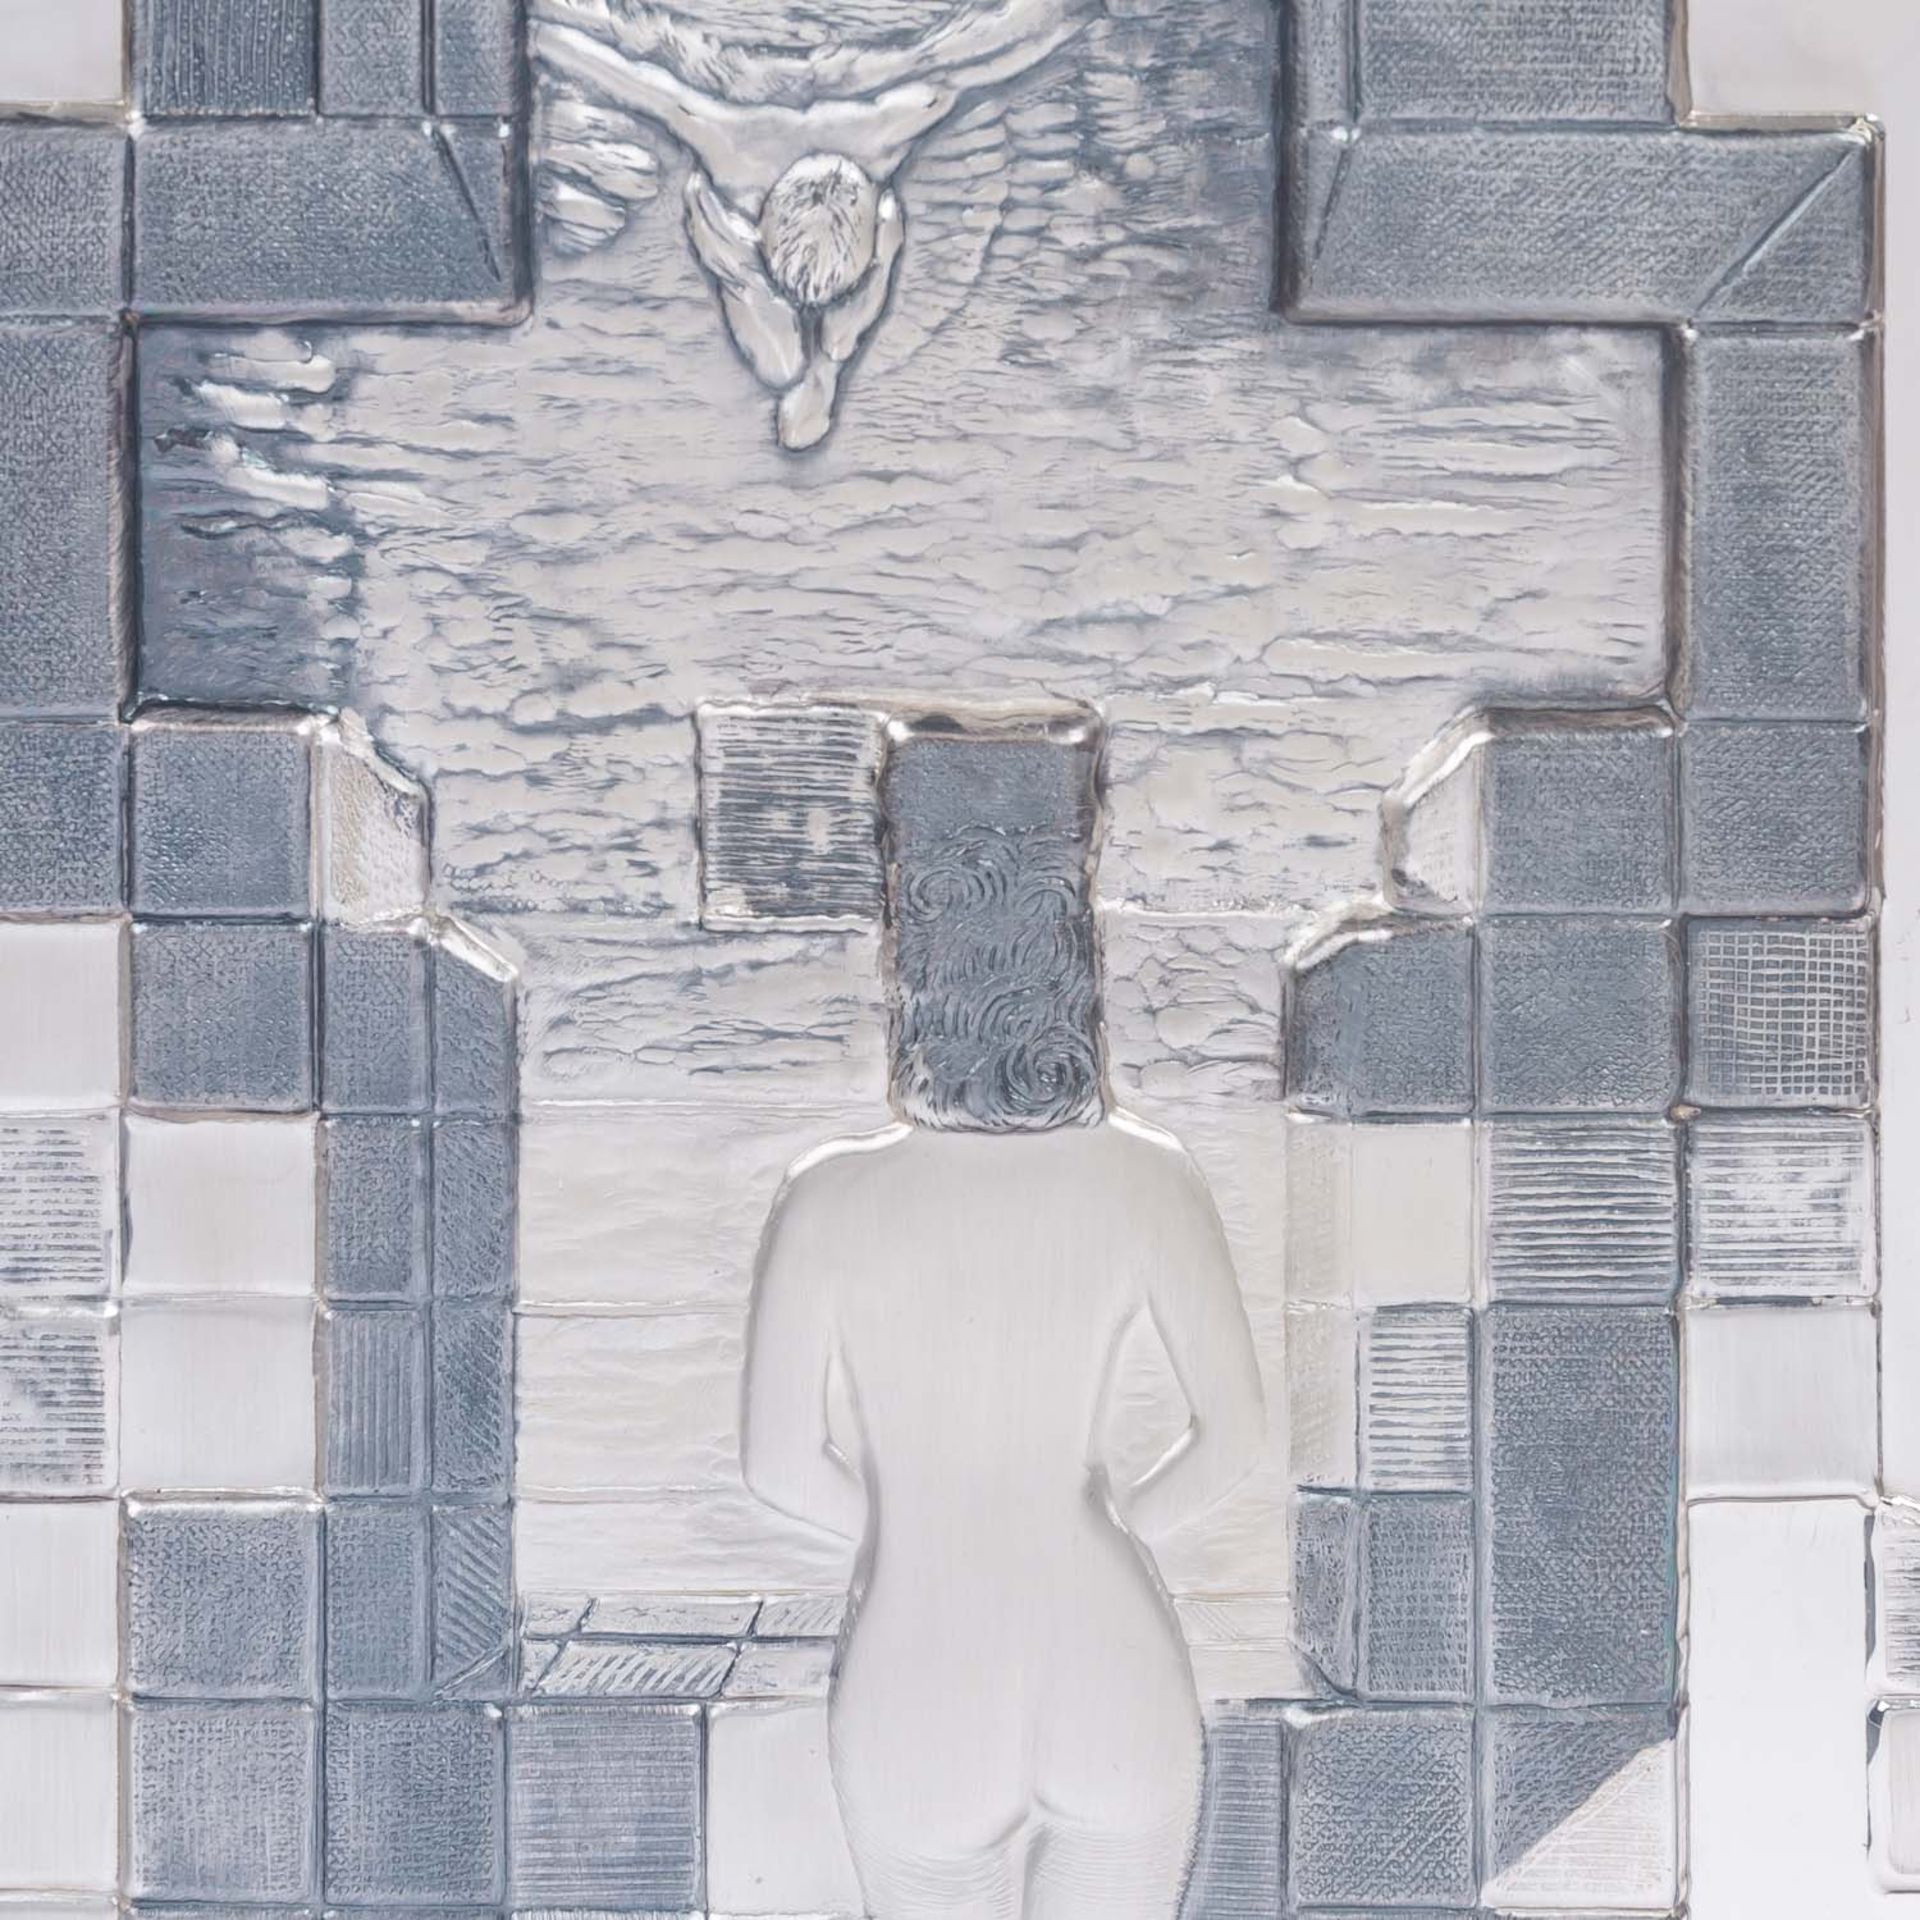 DALI, SALVADOR (1904-1989), 'Gala', 925 Silberrelief, 20. Jh., - Image 4 of 6